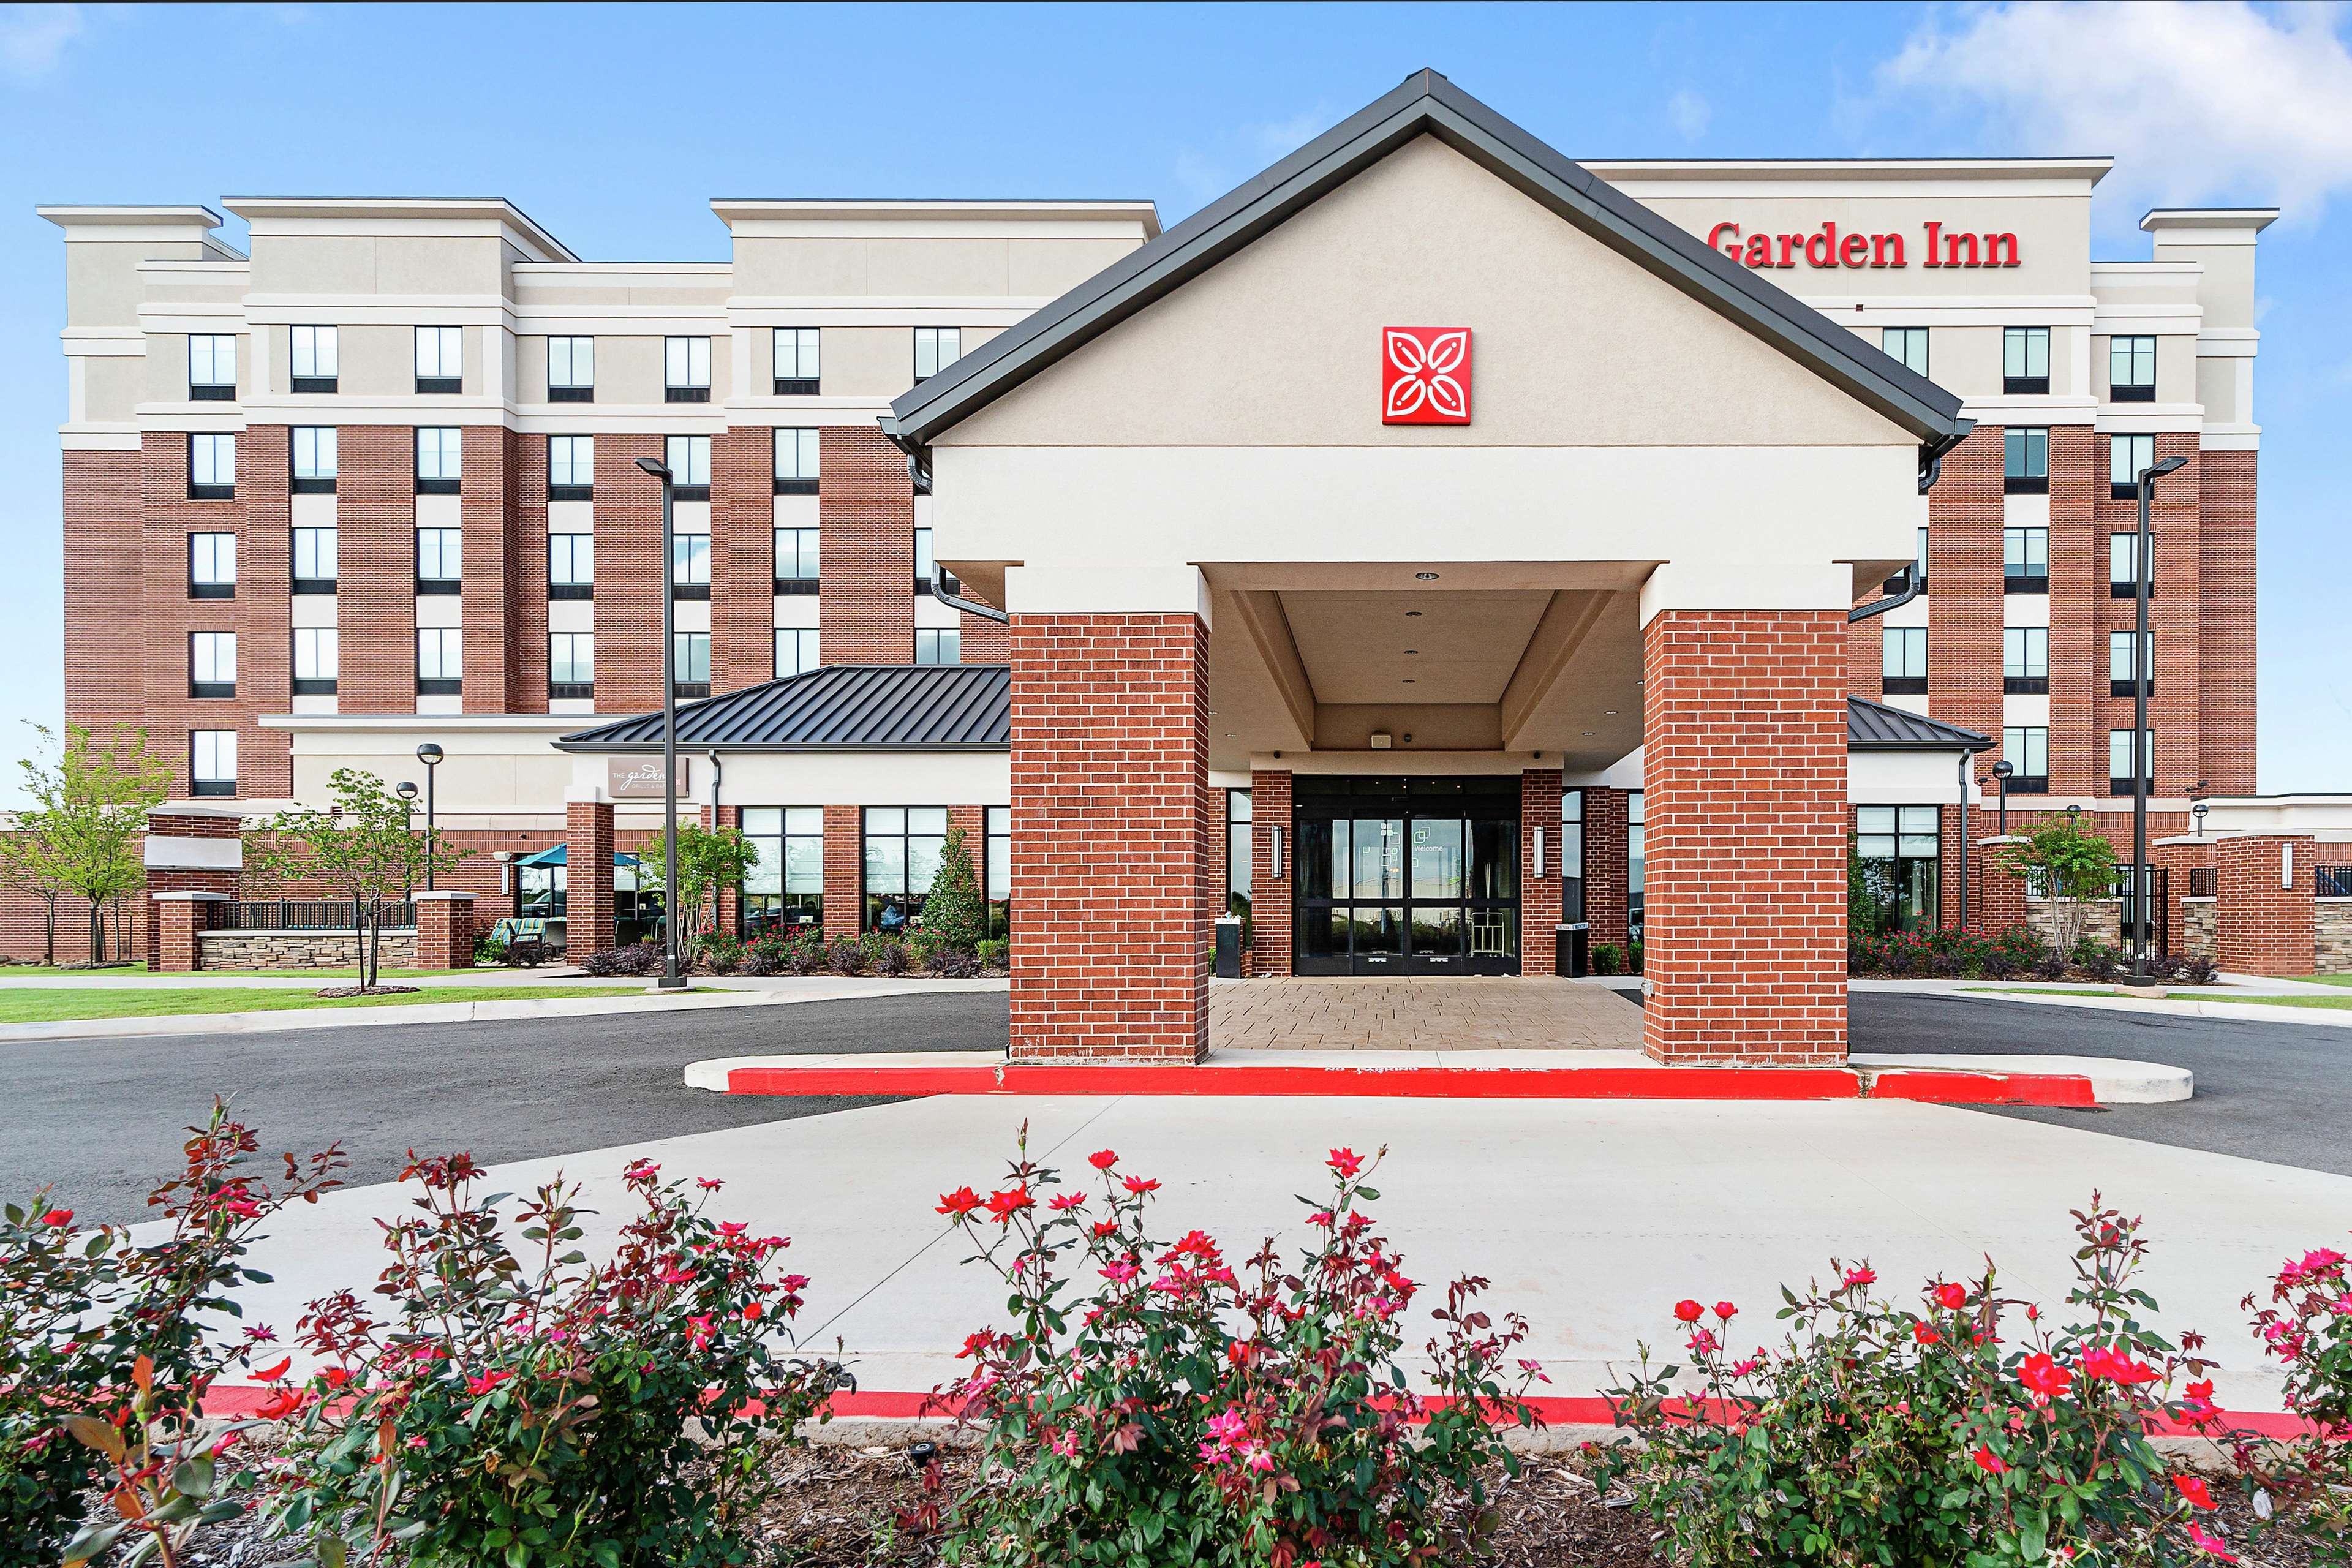 Hilton Garden Inn Edmond Oklahoma City North 2833 Conference Drive Covell I-35 Edmond Ok Hotels Motels - Mapquest